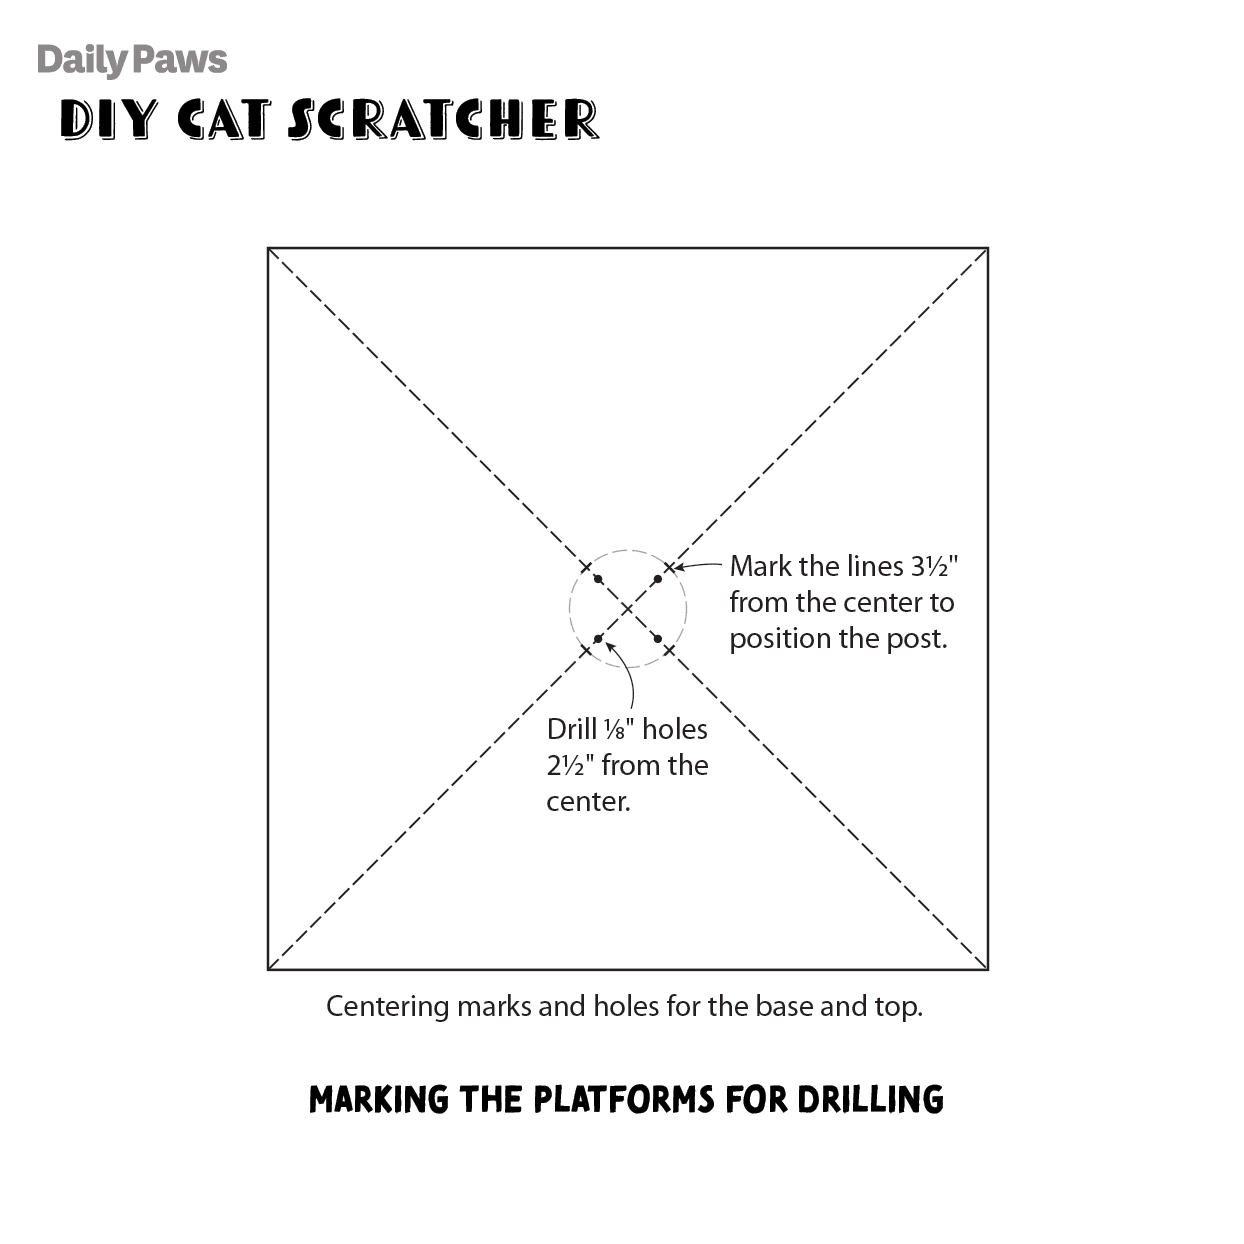 DIY cat scratcher how-to illustration making the platforms for drilling